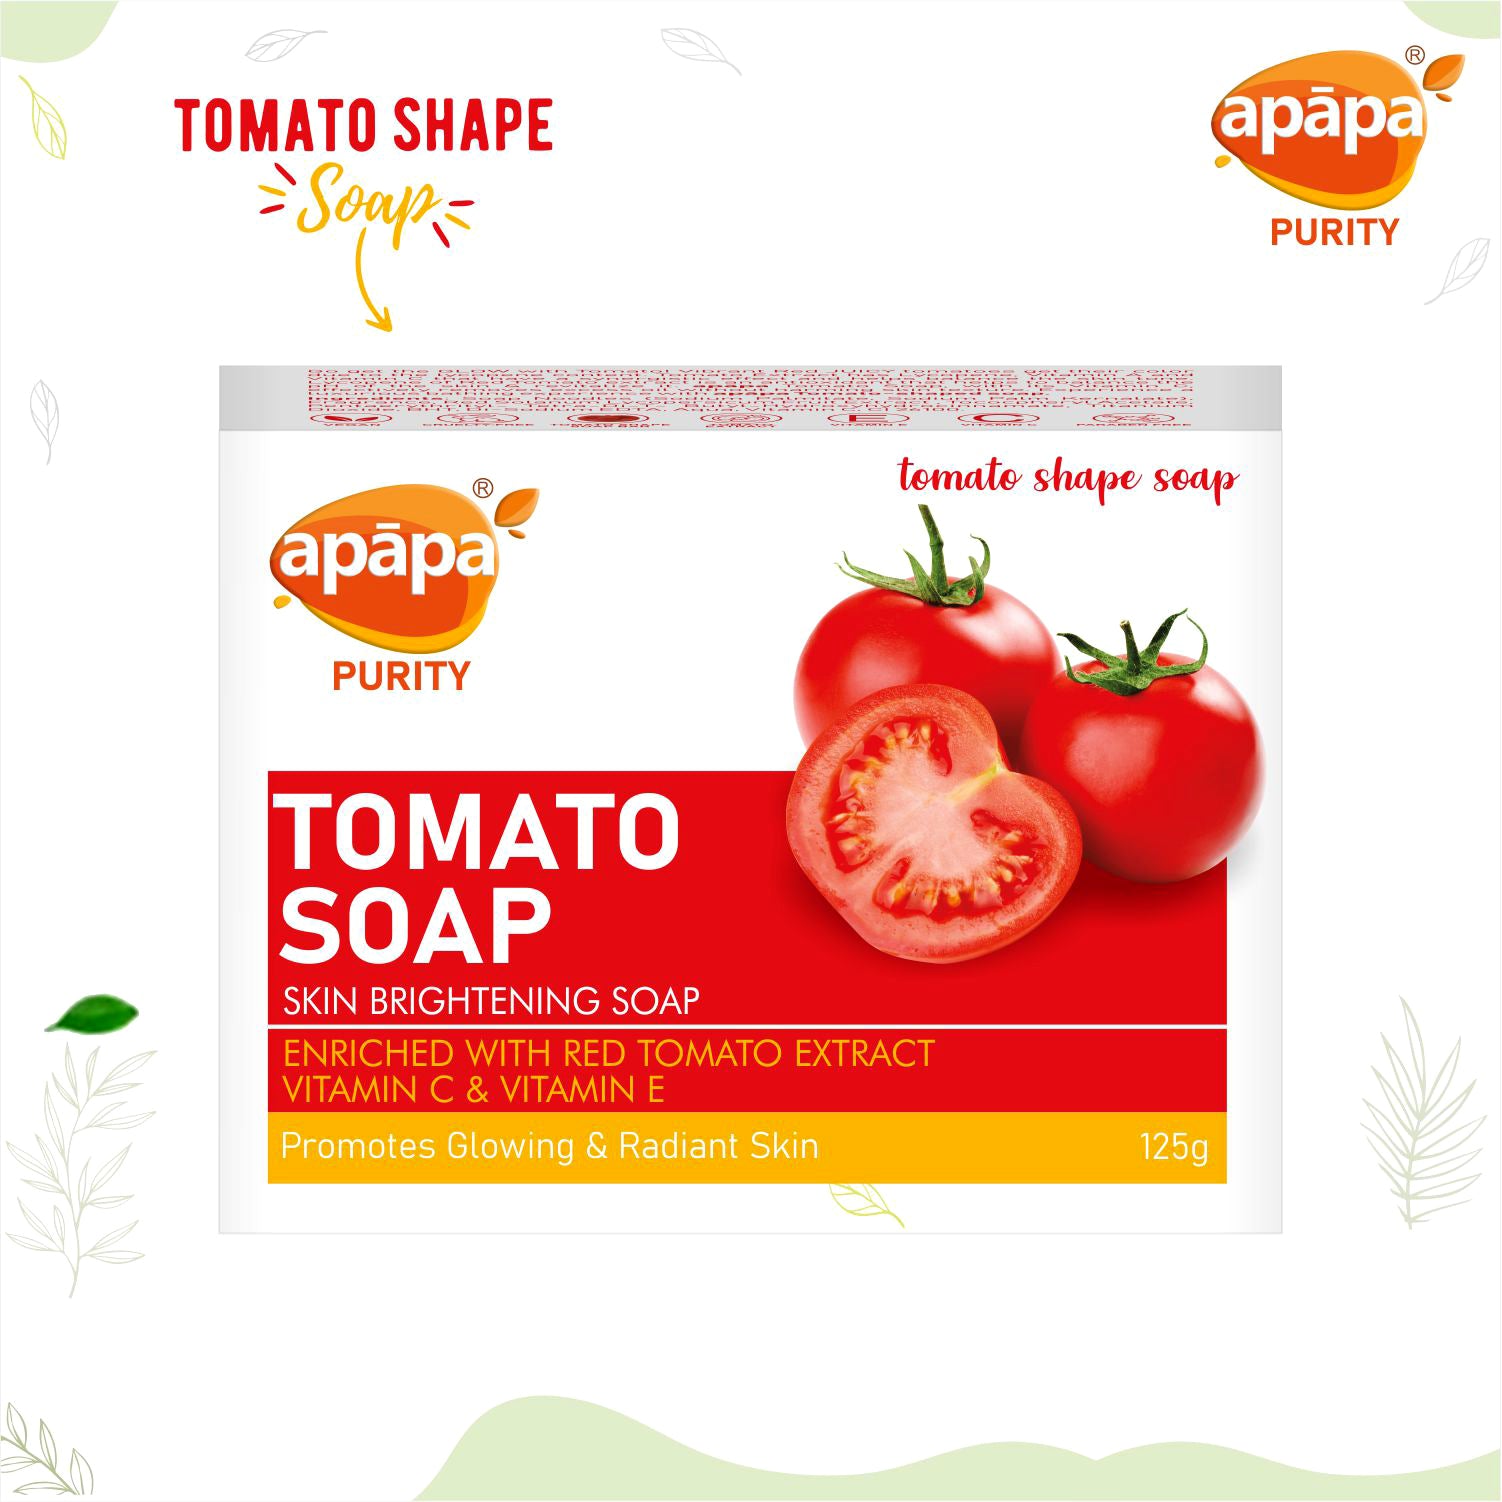 APĀPA Tomato Soap